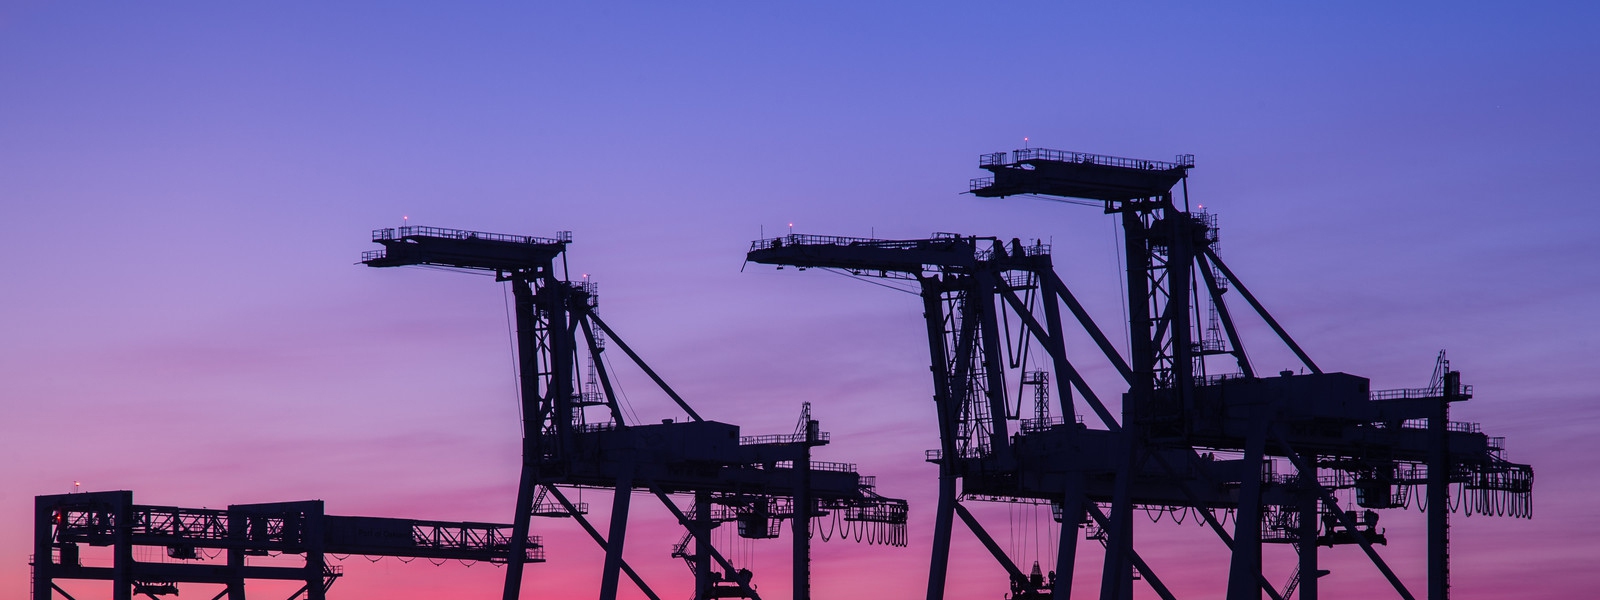 140616 9086 Port Of Oakland Cranes At Sunset X3